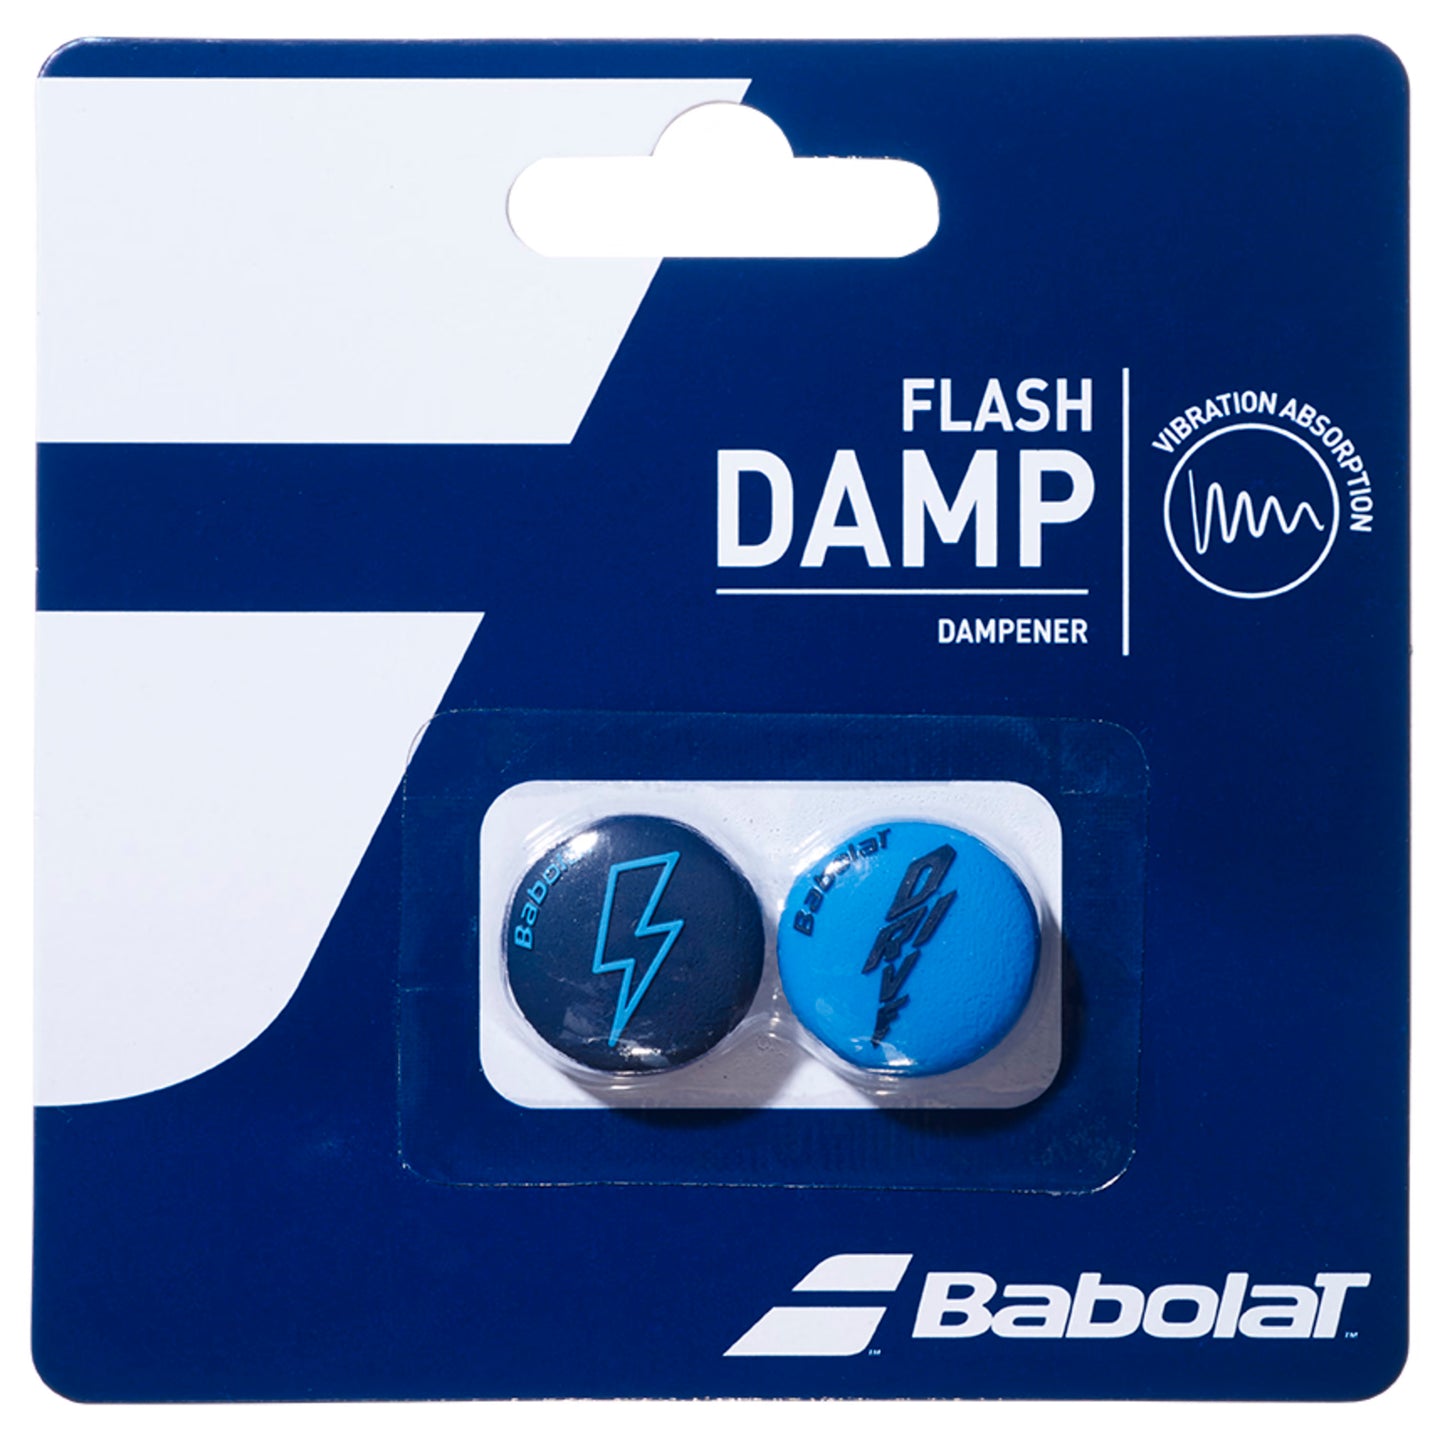 Babolat Flash Damp Vibration Dampener